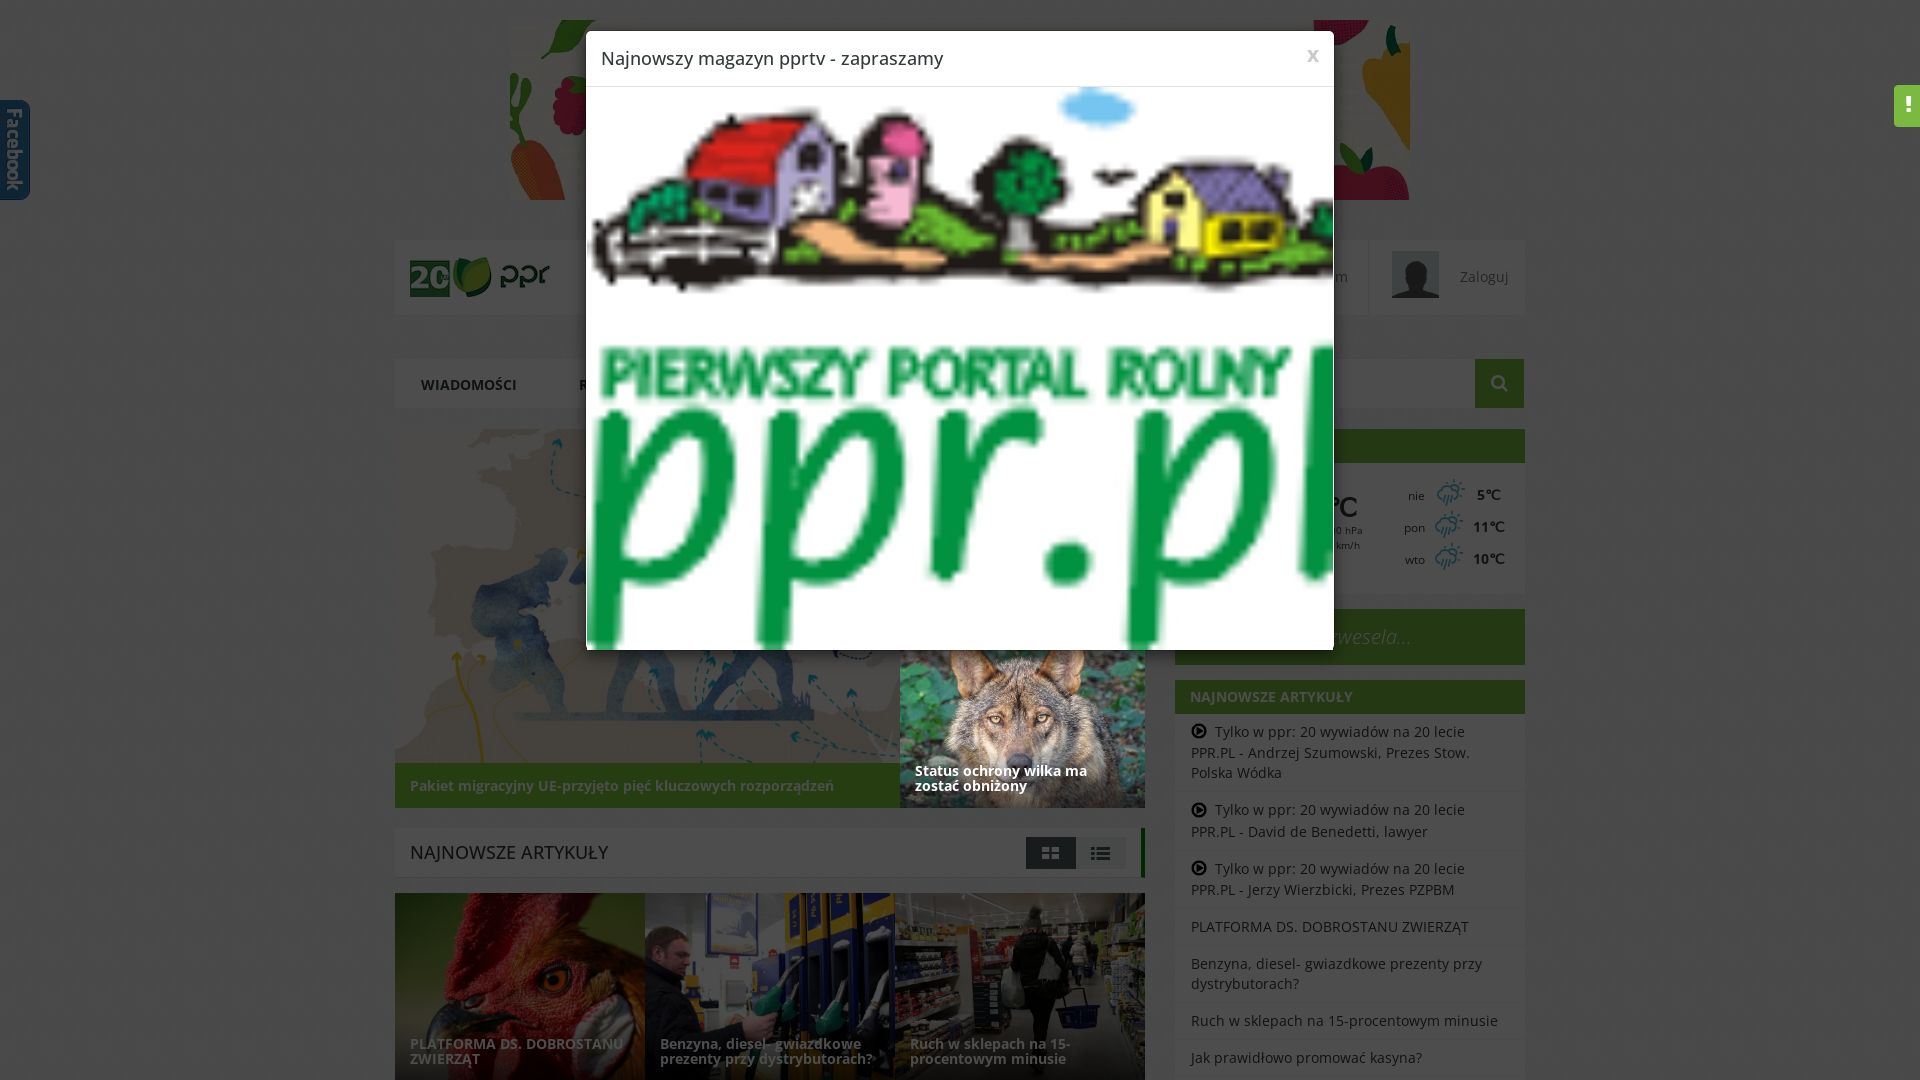 Website status ppr.pl is   ONLINE